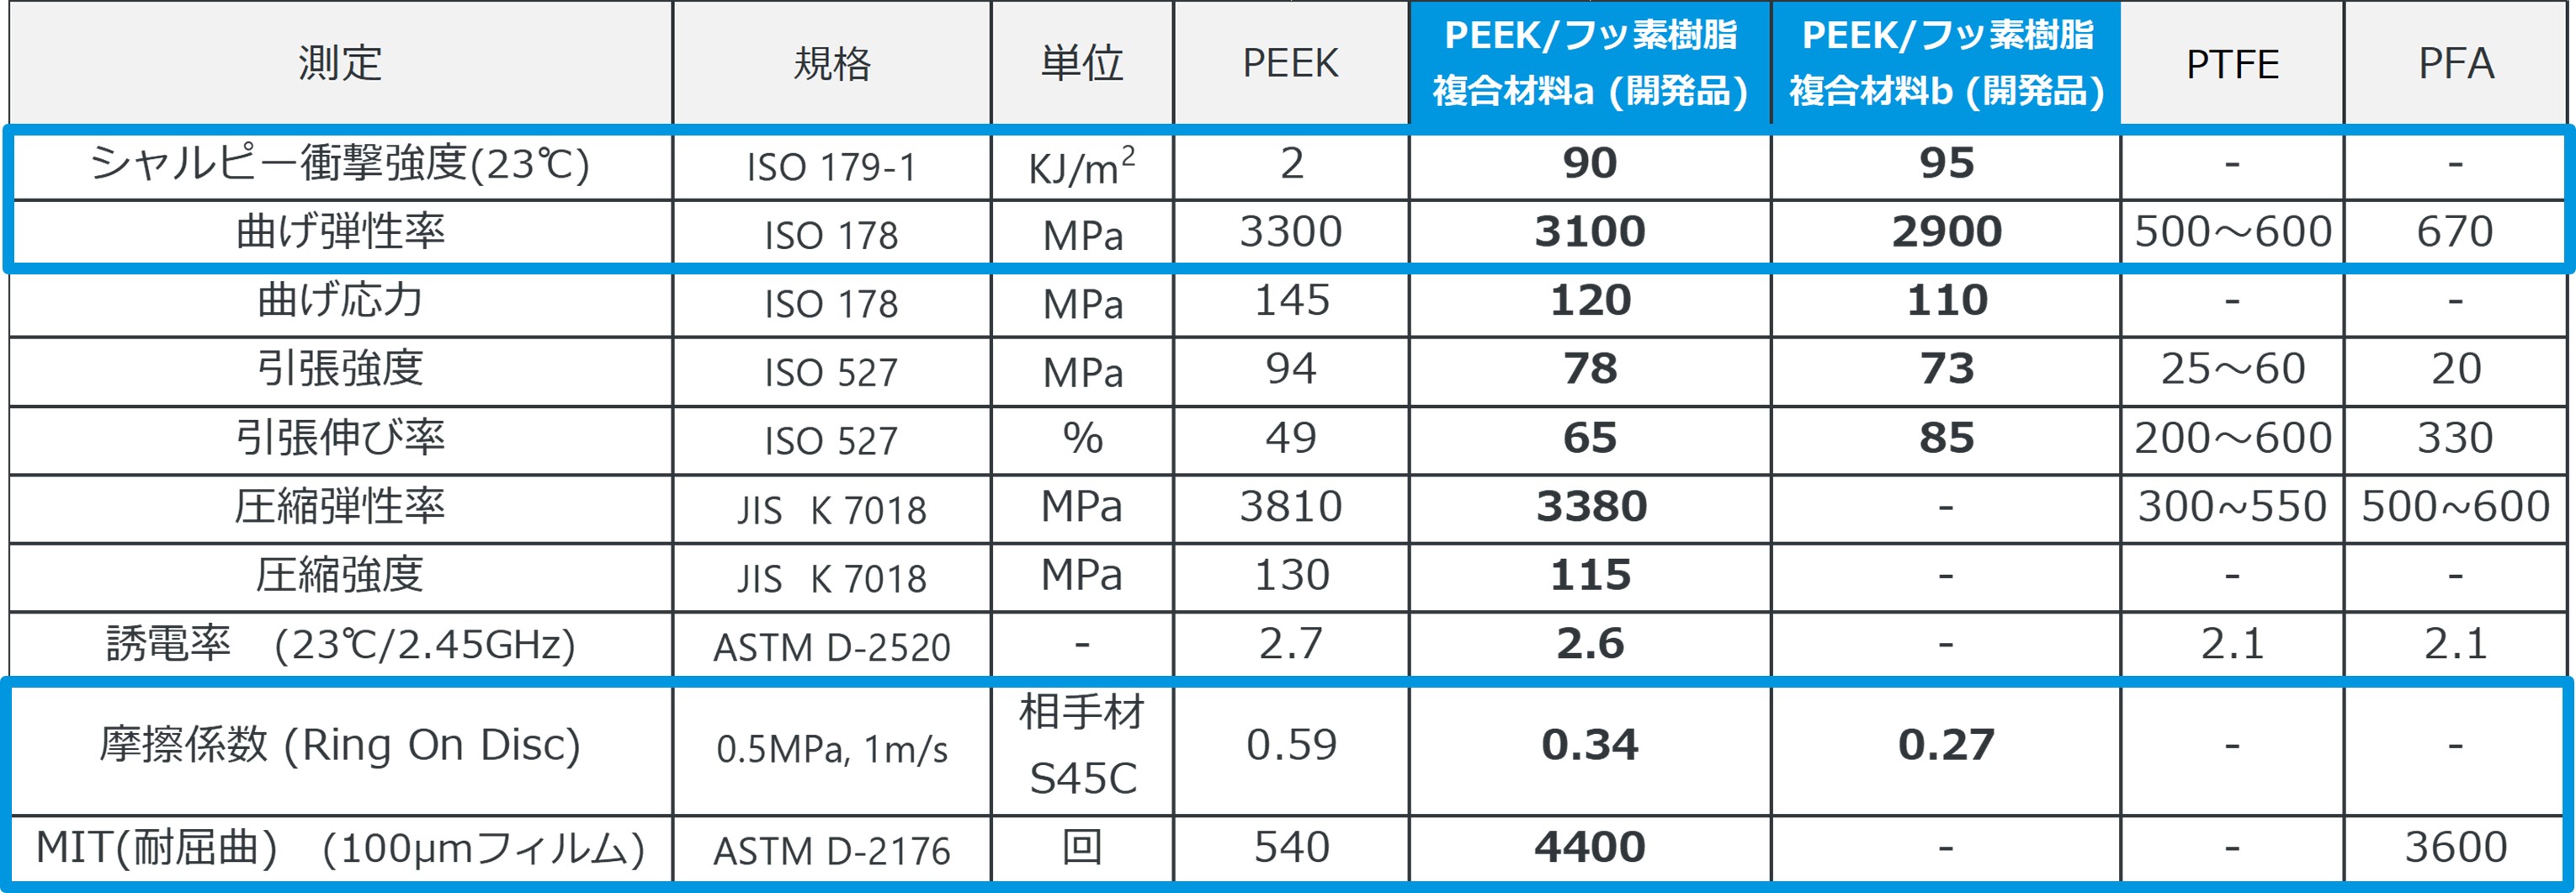 PEEK/フッ素樹脂複合材料の物性表